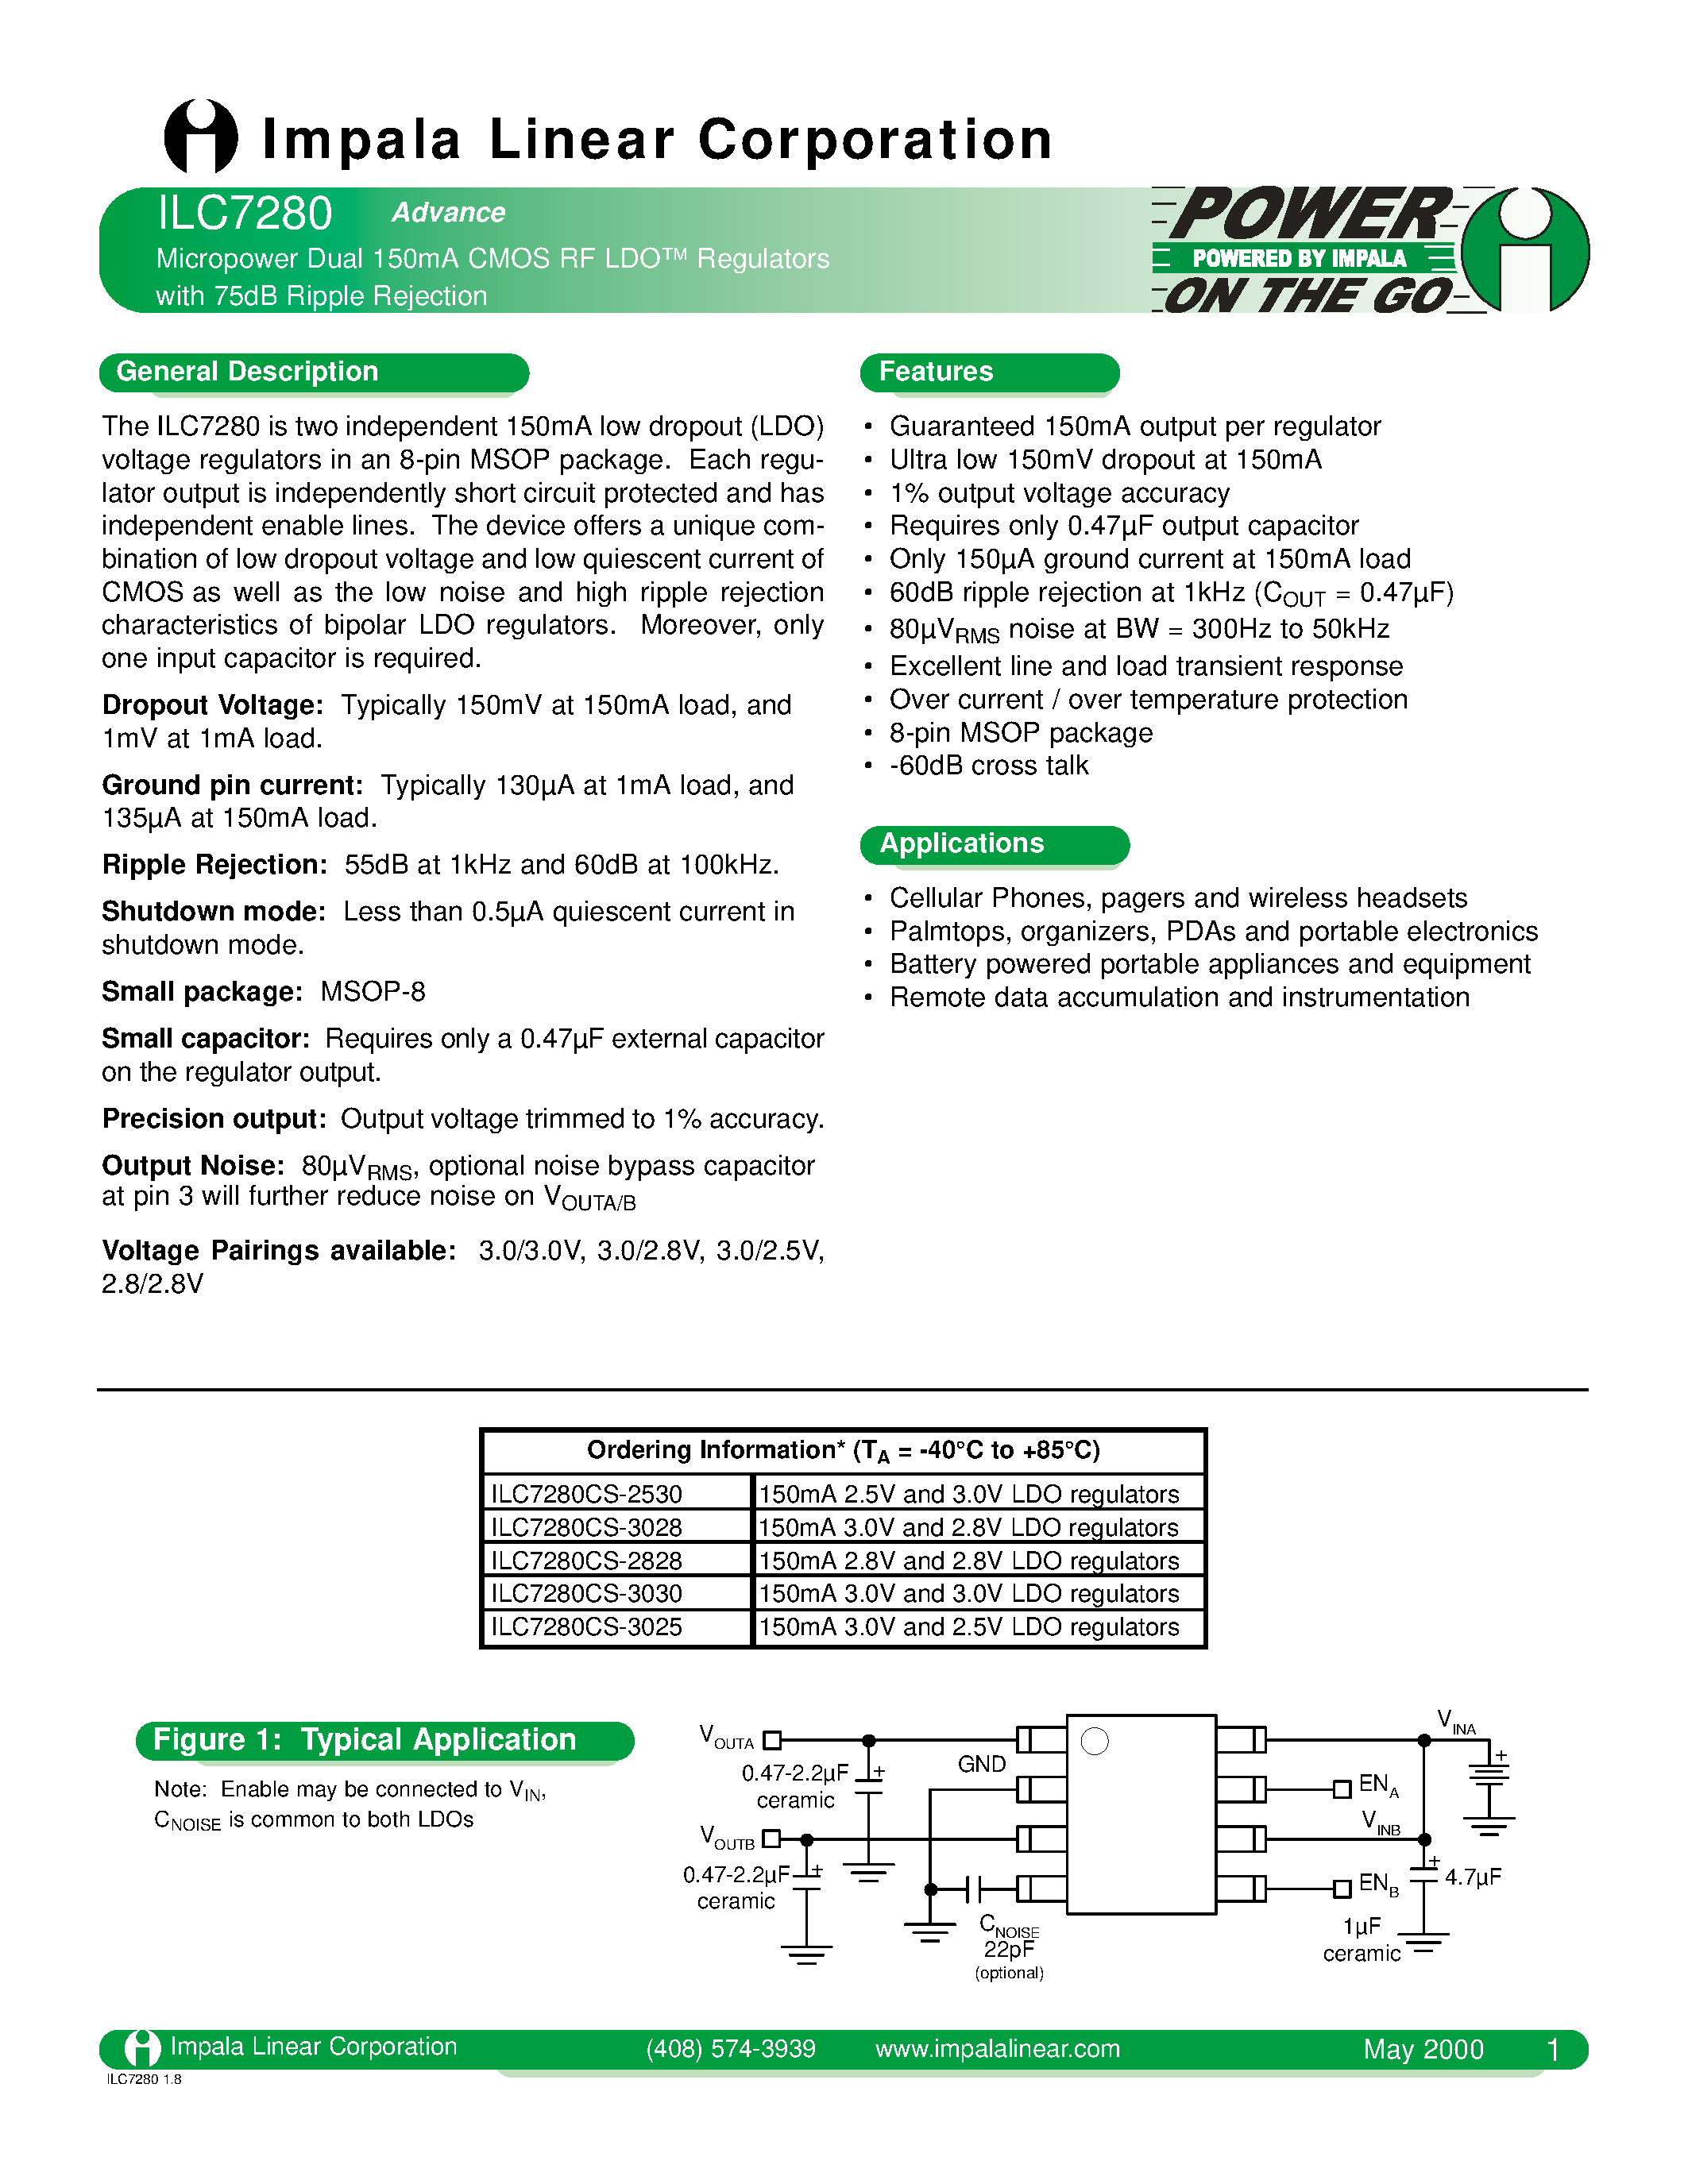 Даташит ILC7280CS-2828 - MICROPOWER DUAL 150MA CMOS RF LDO REGULATORS WITH 75DB RIPPLE REJECTION страница 1